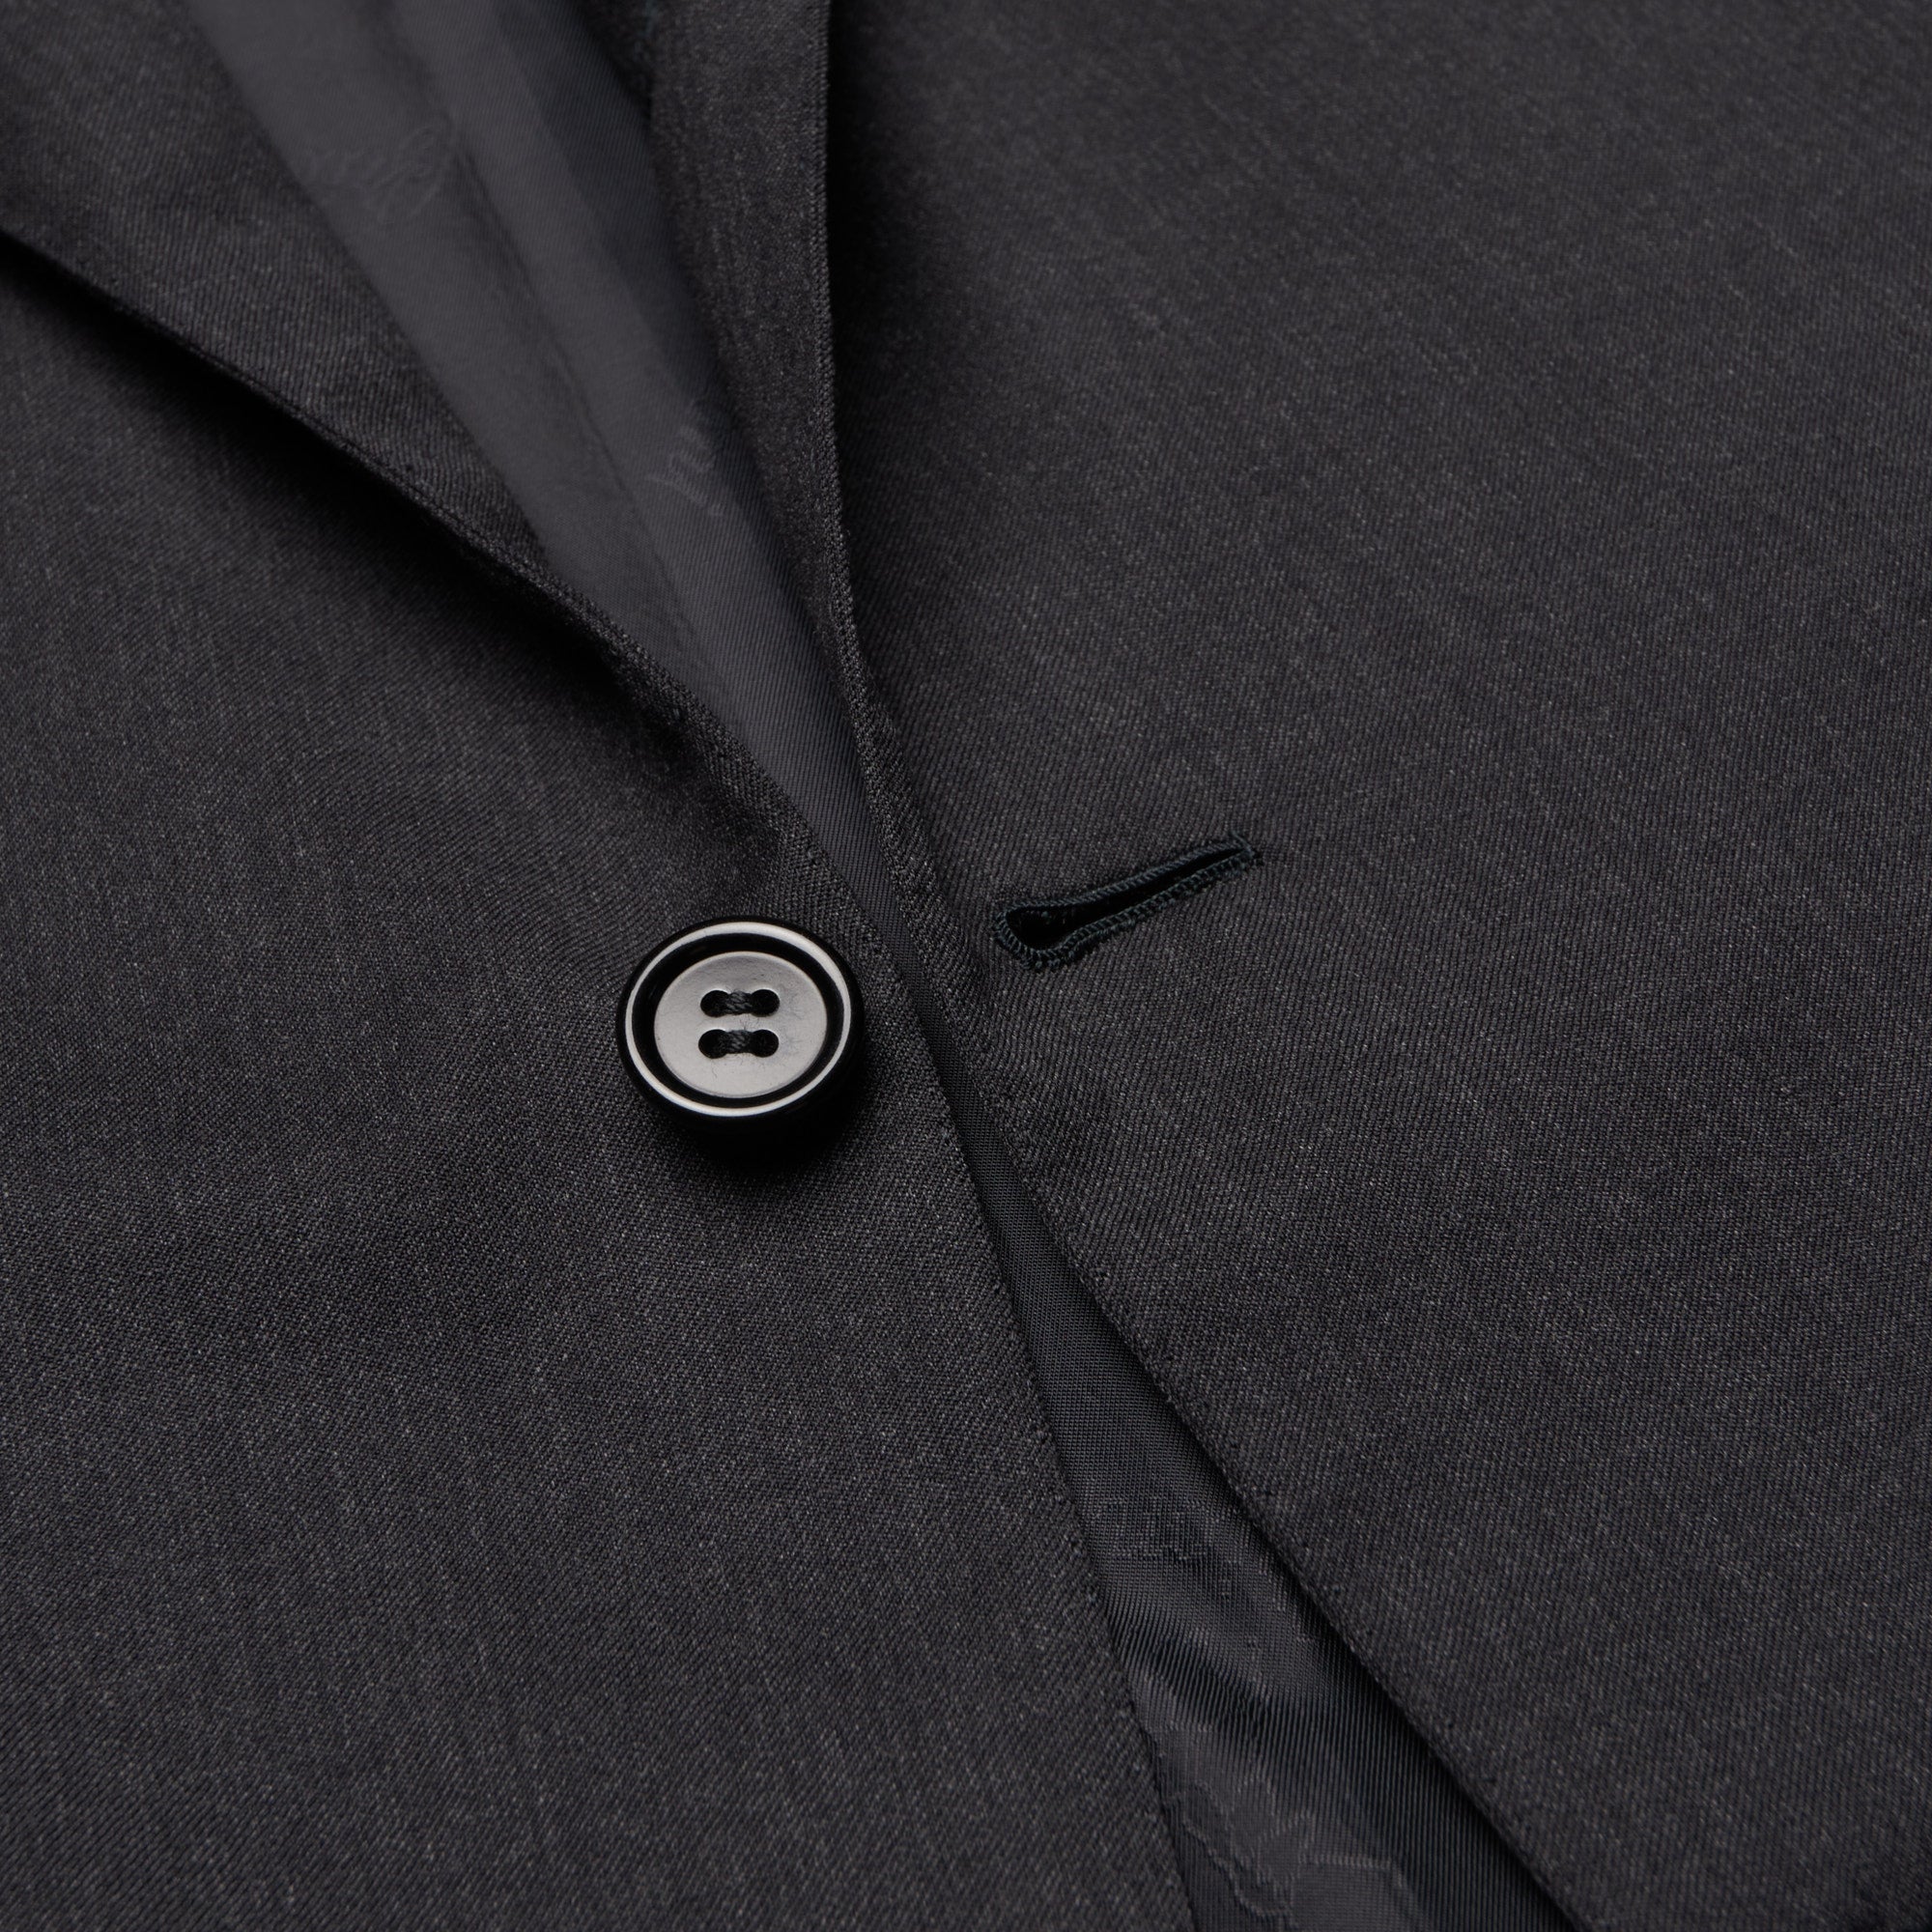 BRIONI "PARLAMENTO" Charcoal Gray Wool Super 150' Business Suit EU 54 NEW US 44